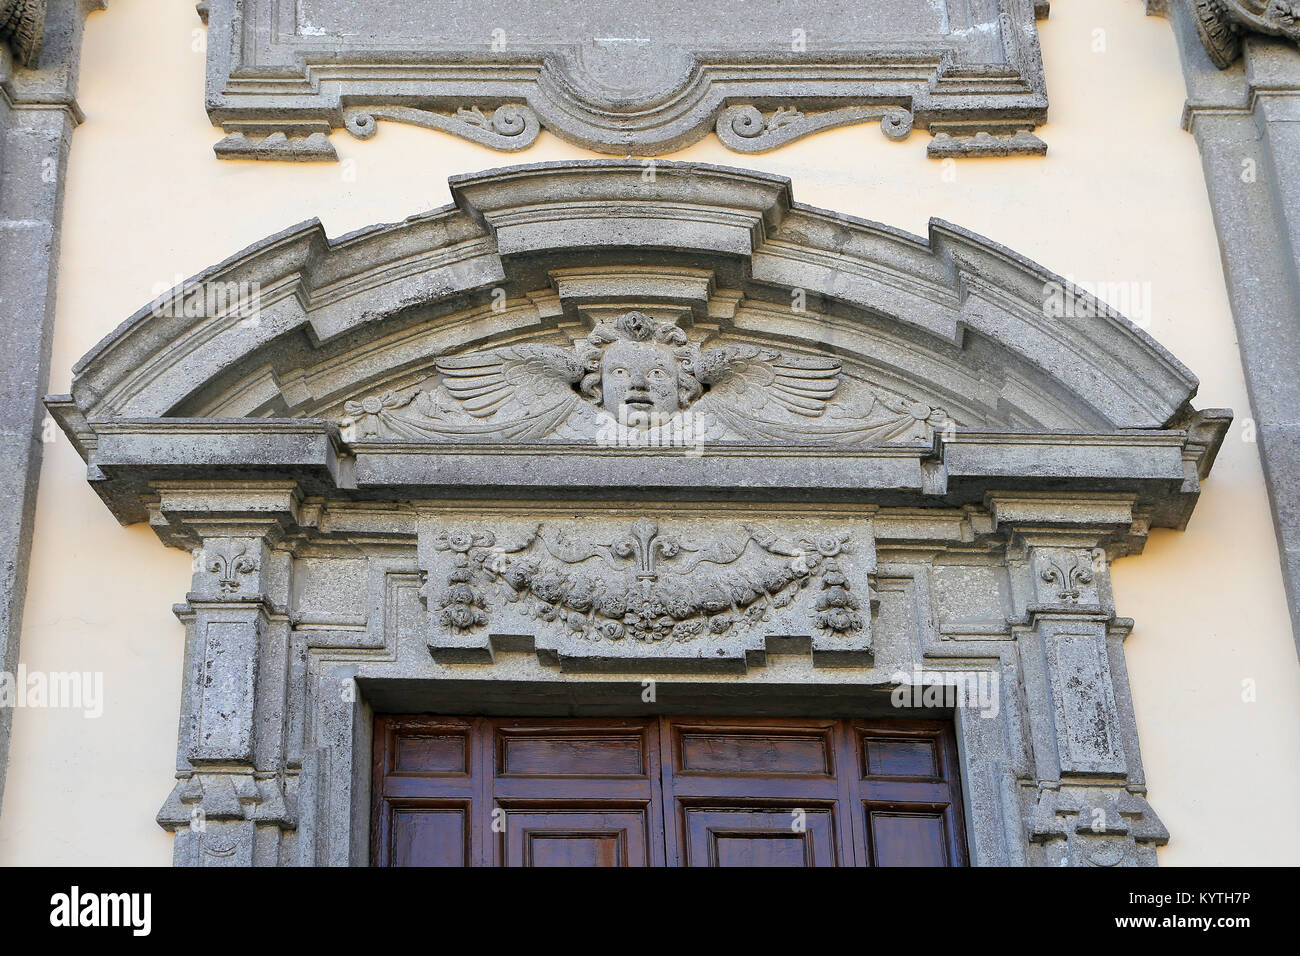 The church of Santa Teresa in Caprarola - Details Stock Photo